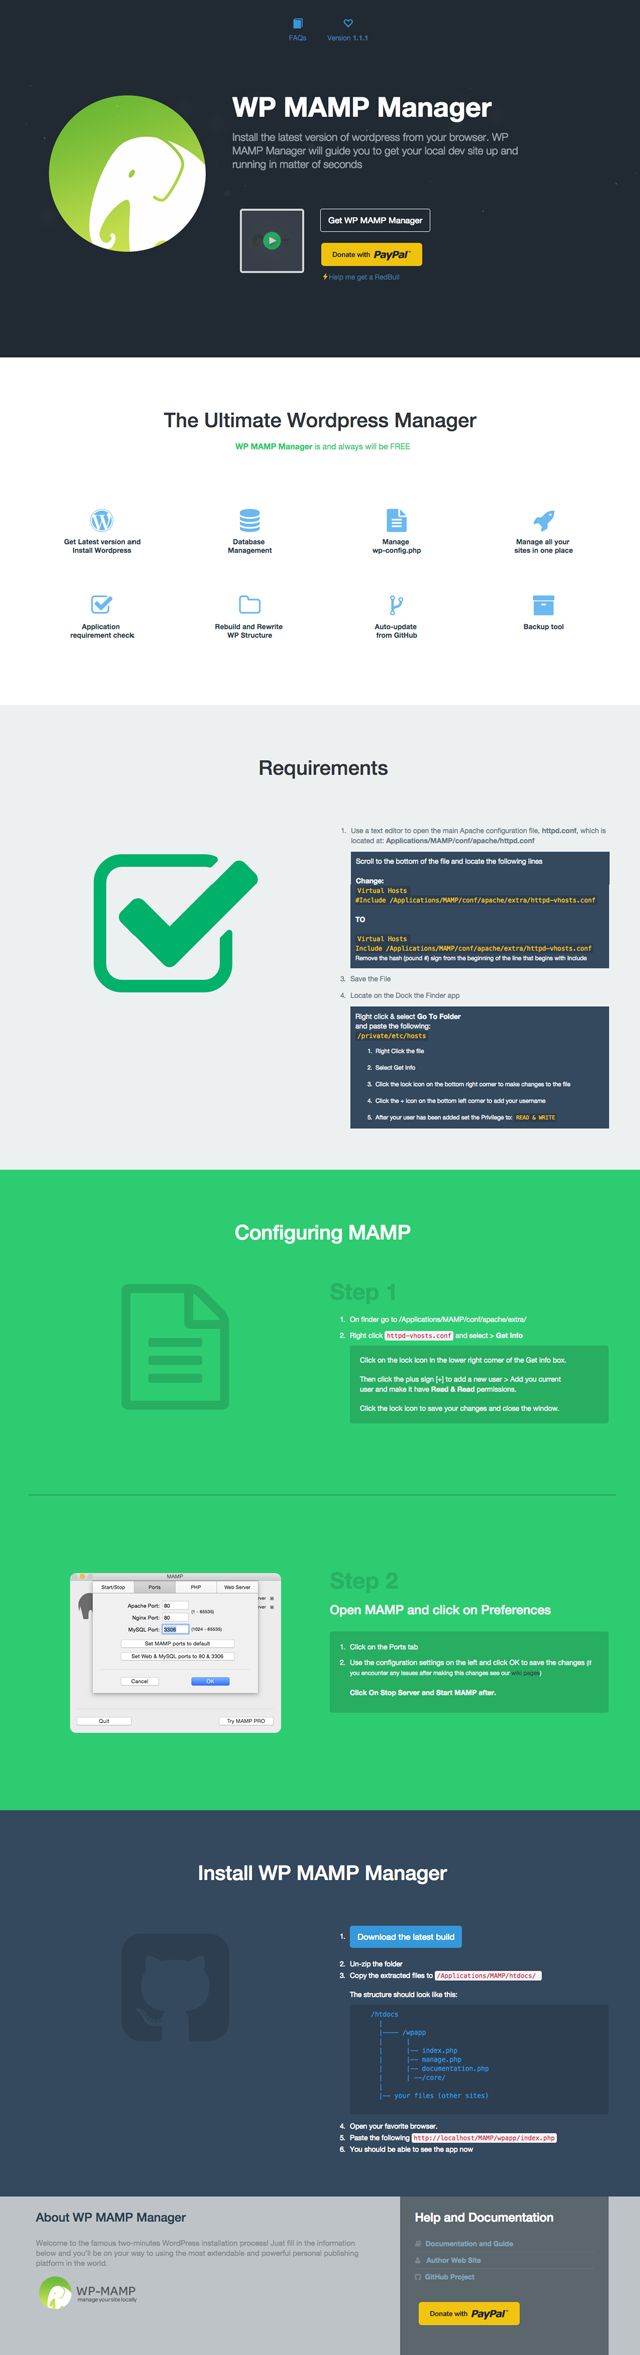 WP MAMP Manager screenshot